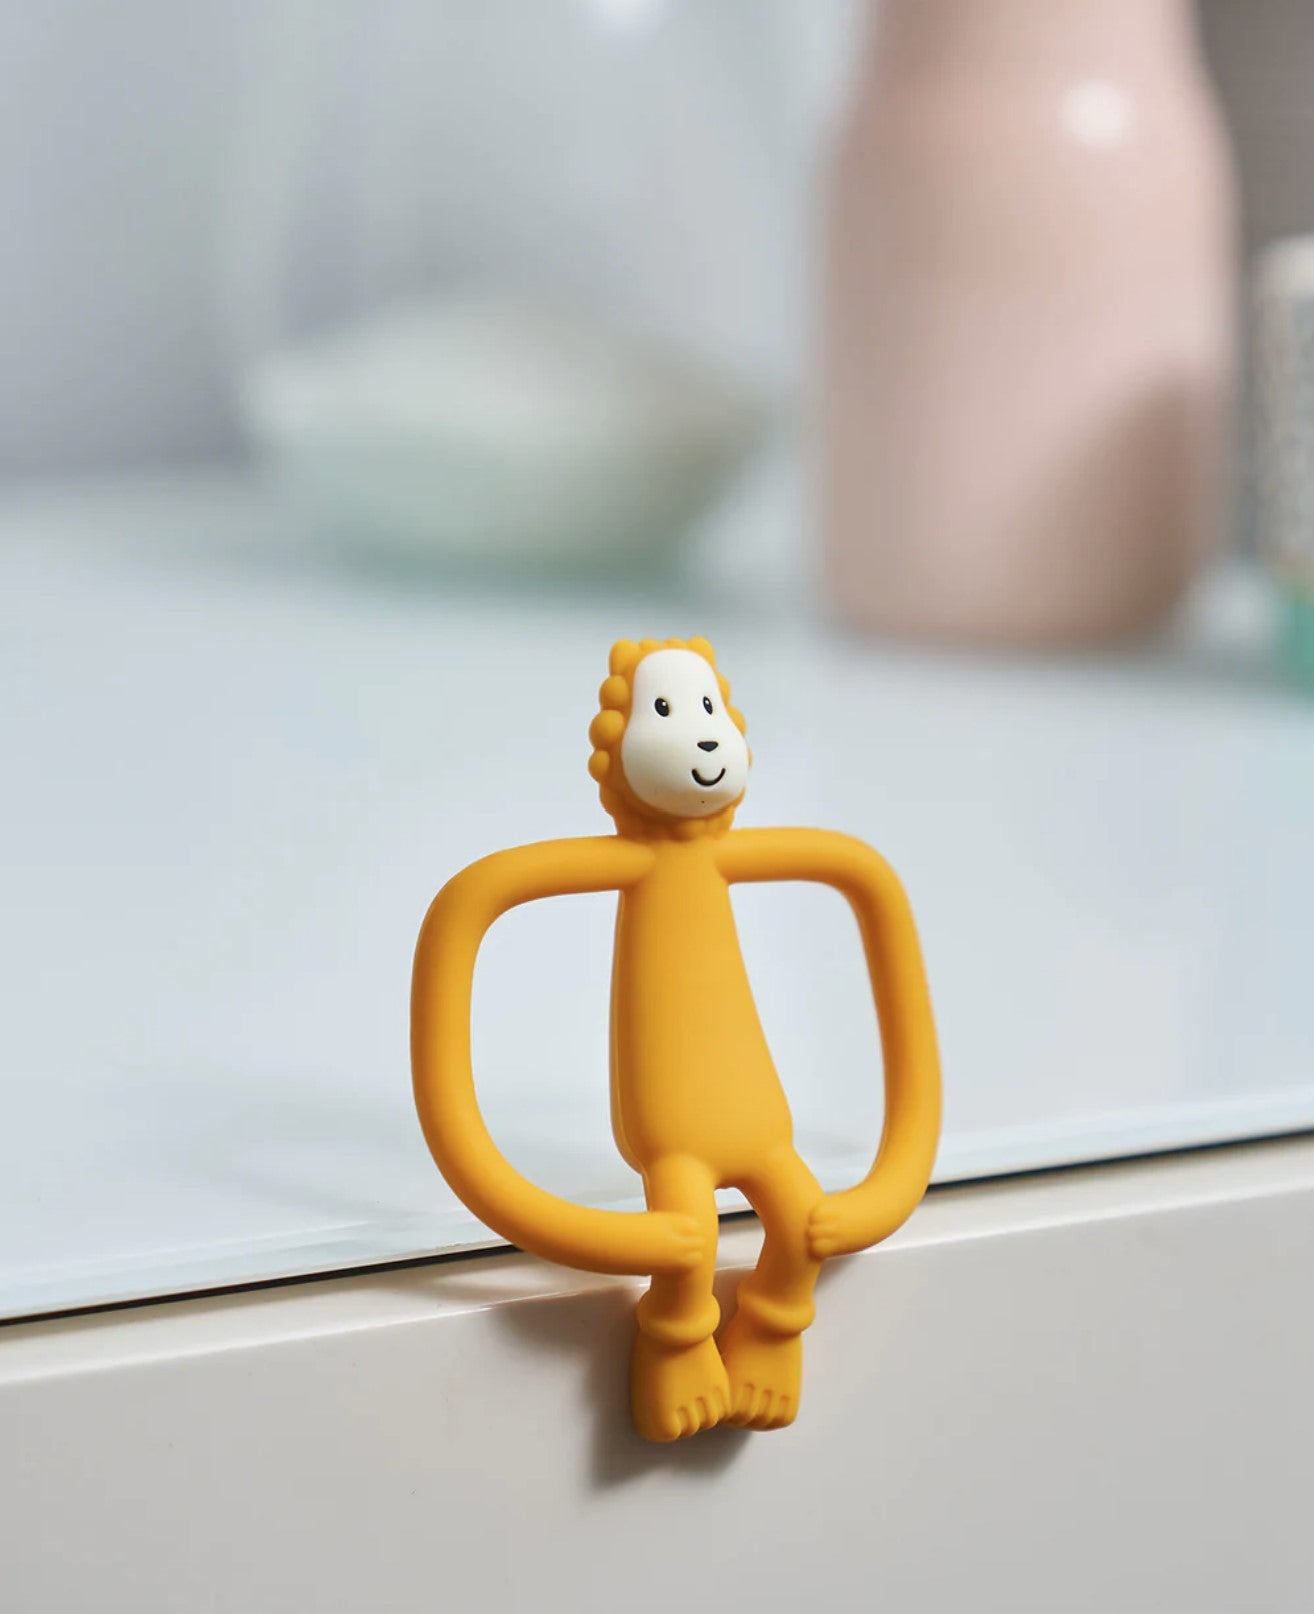 Matchstick Monkey™ Teething Starter Set – Town Centre Pharmacy